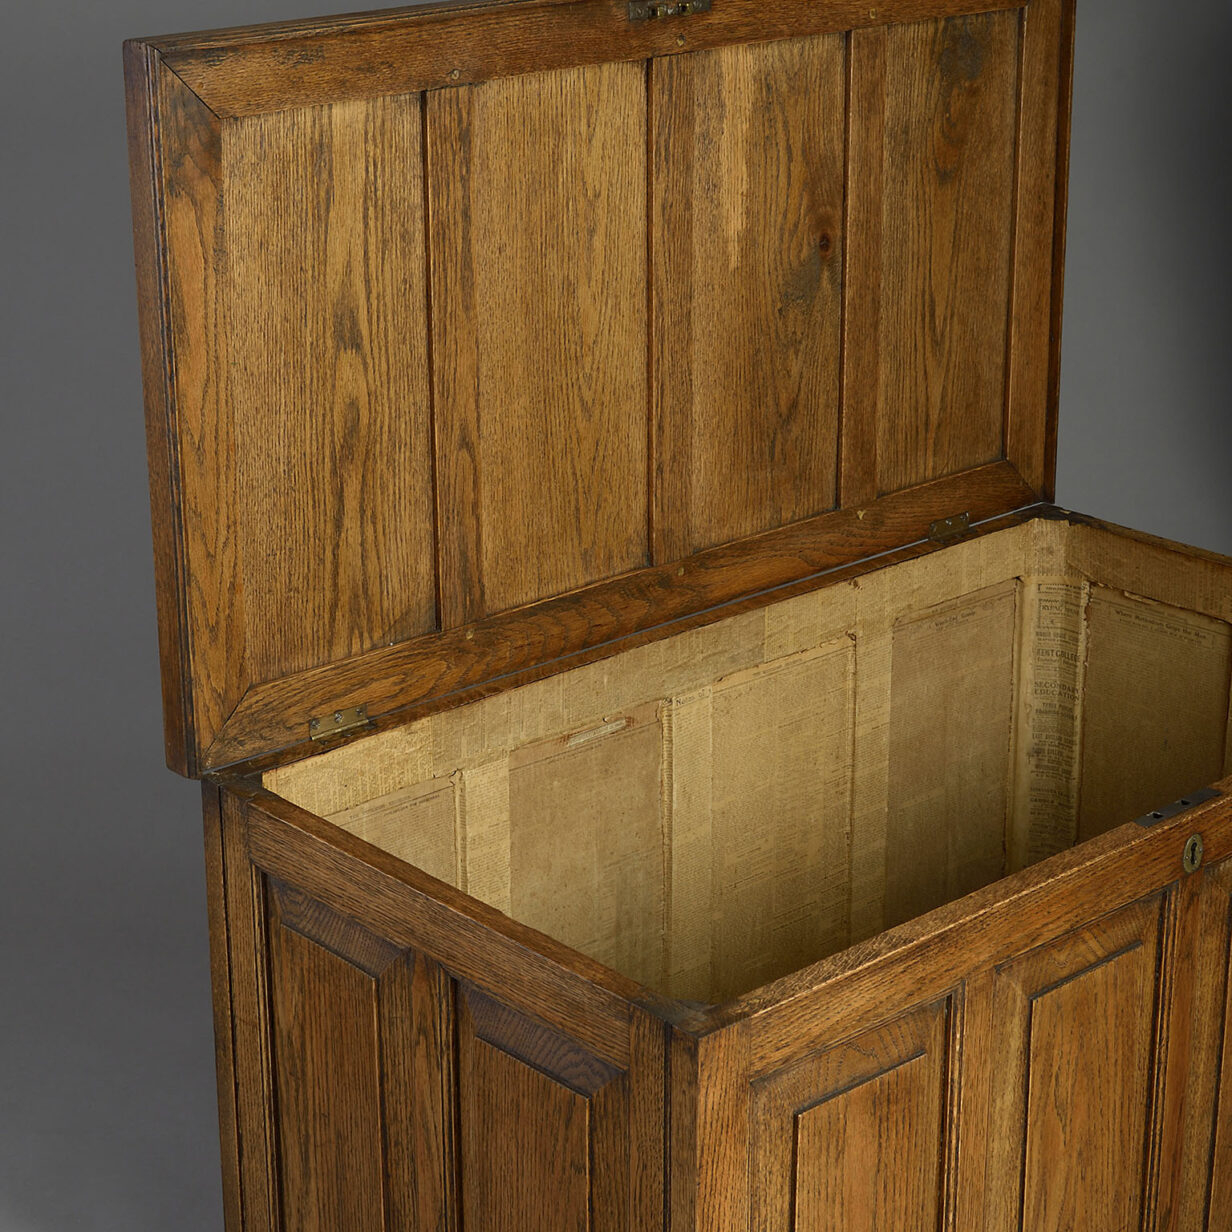 Late 19th century victorian period oak blanket chest